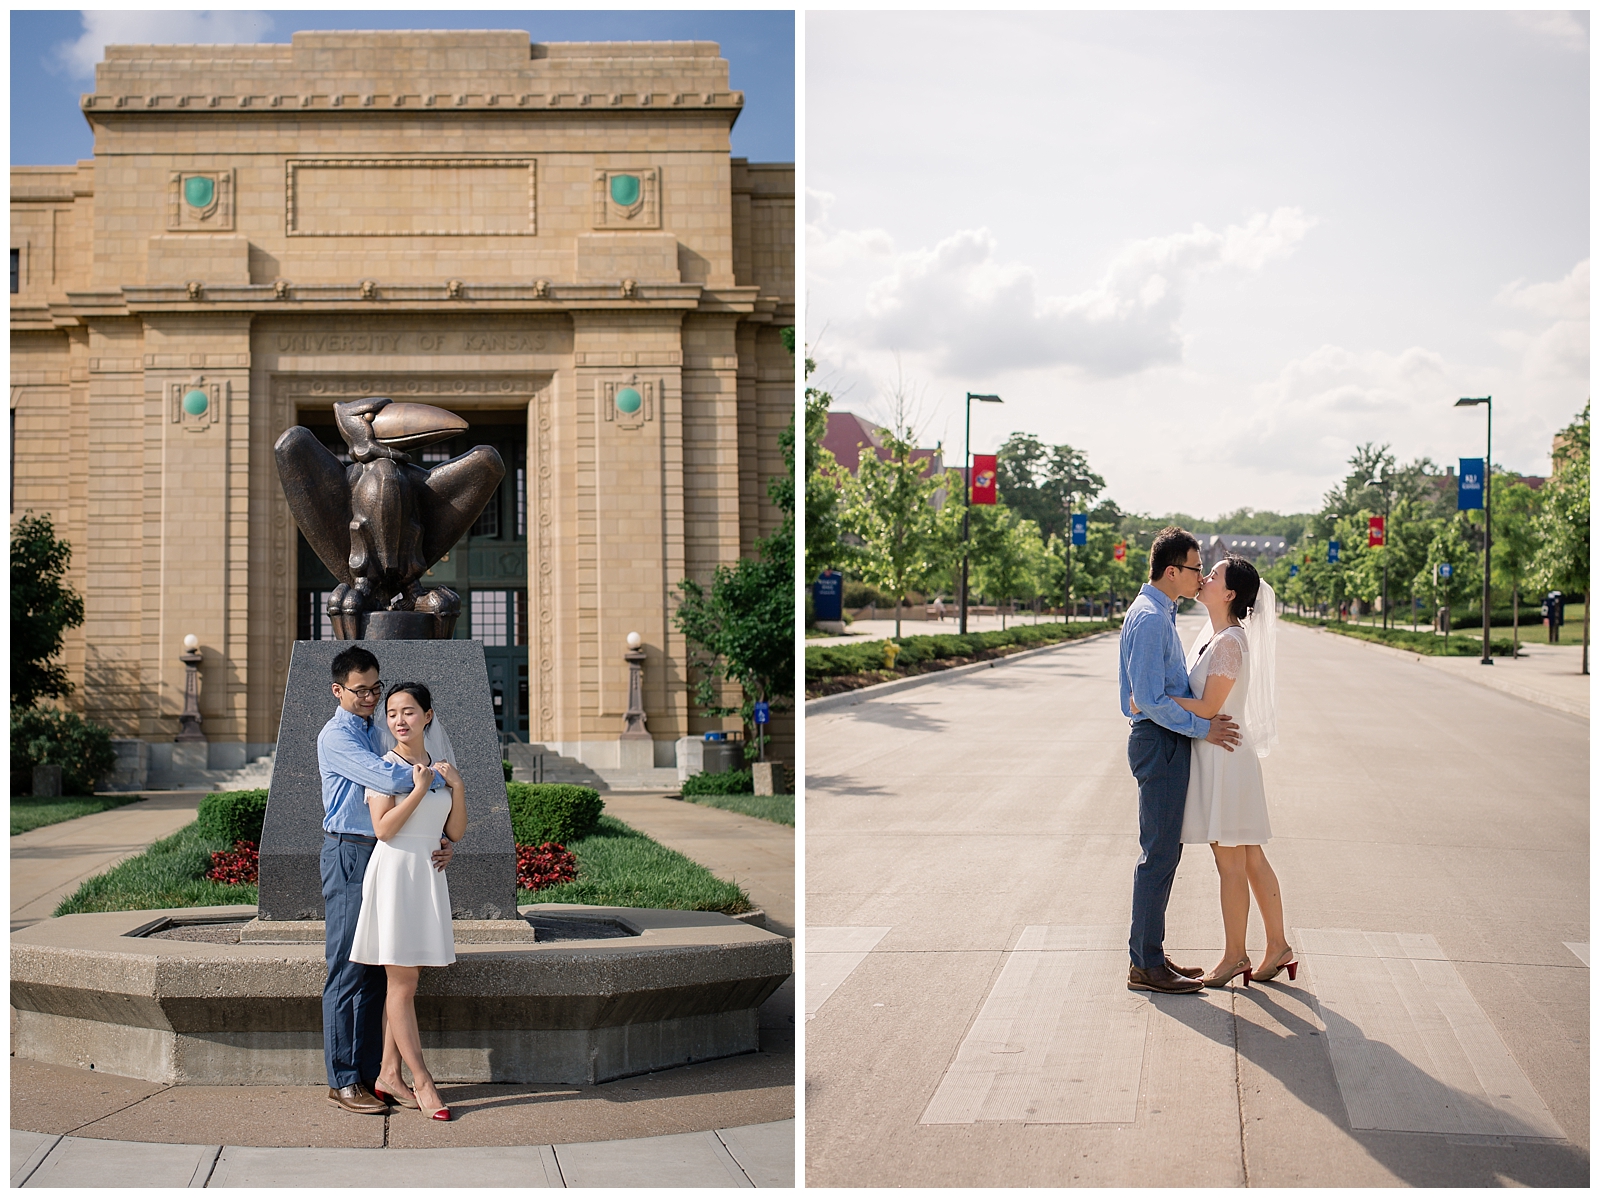 Engagement photography at the University of Kansas by Kansas City wedding photographers Wisdom-Watson Weddings.